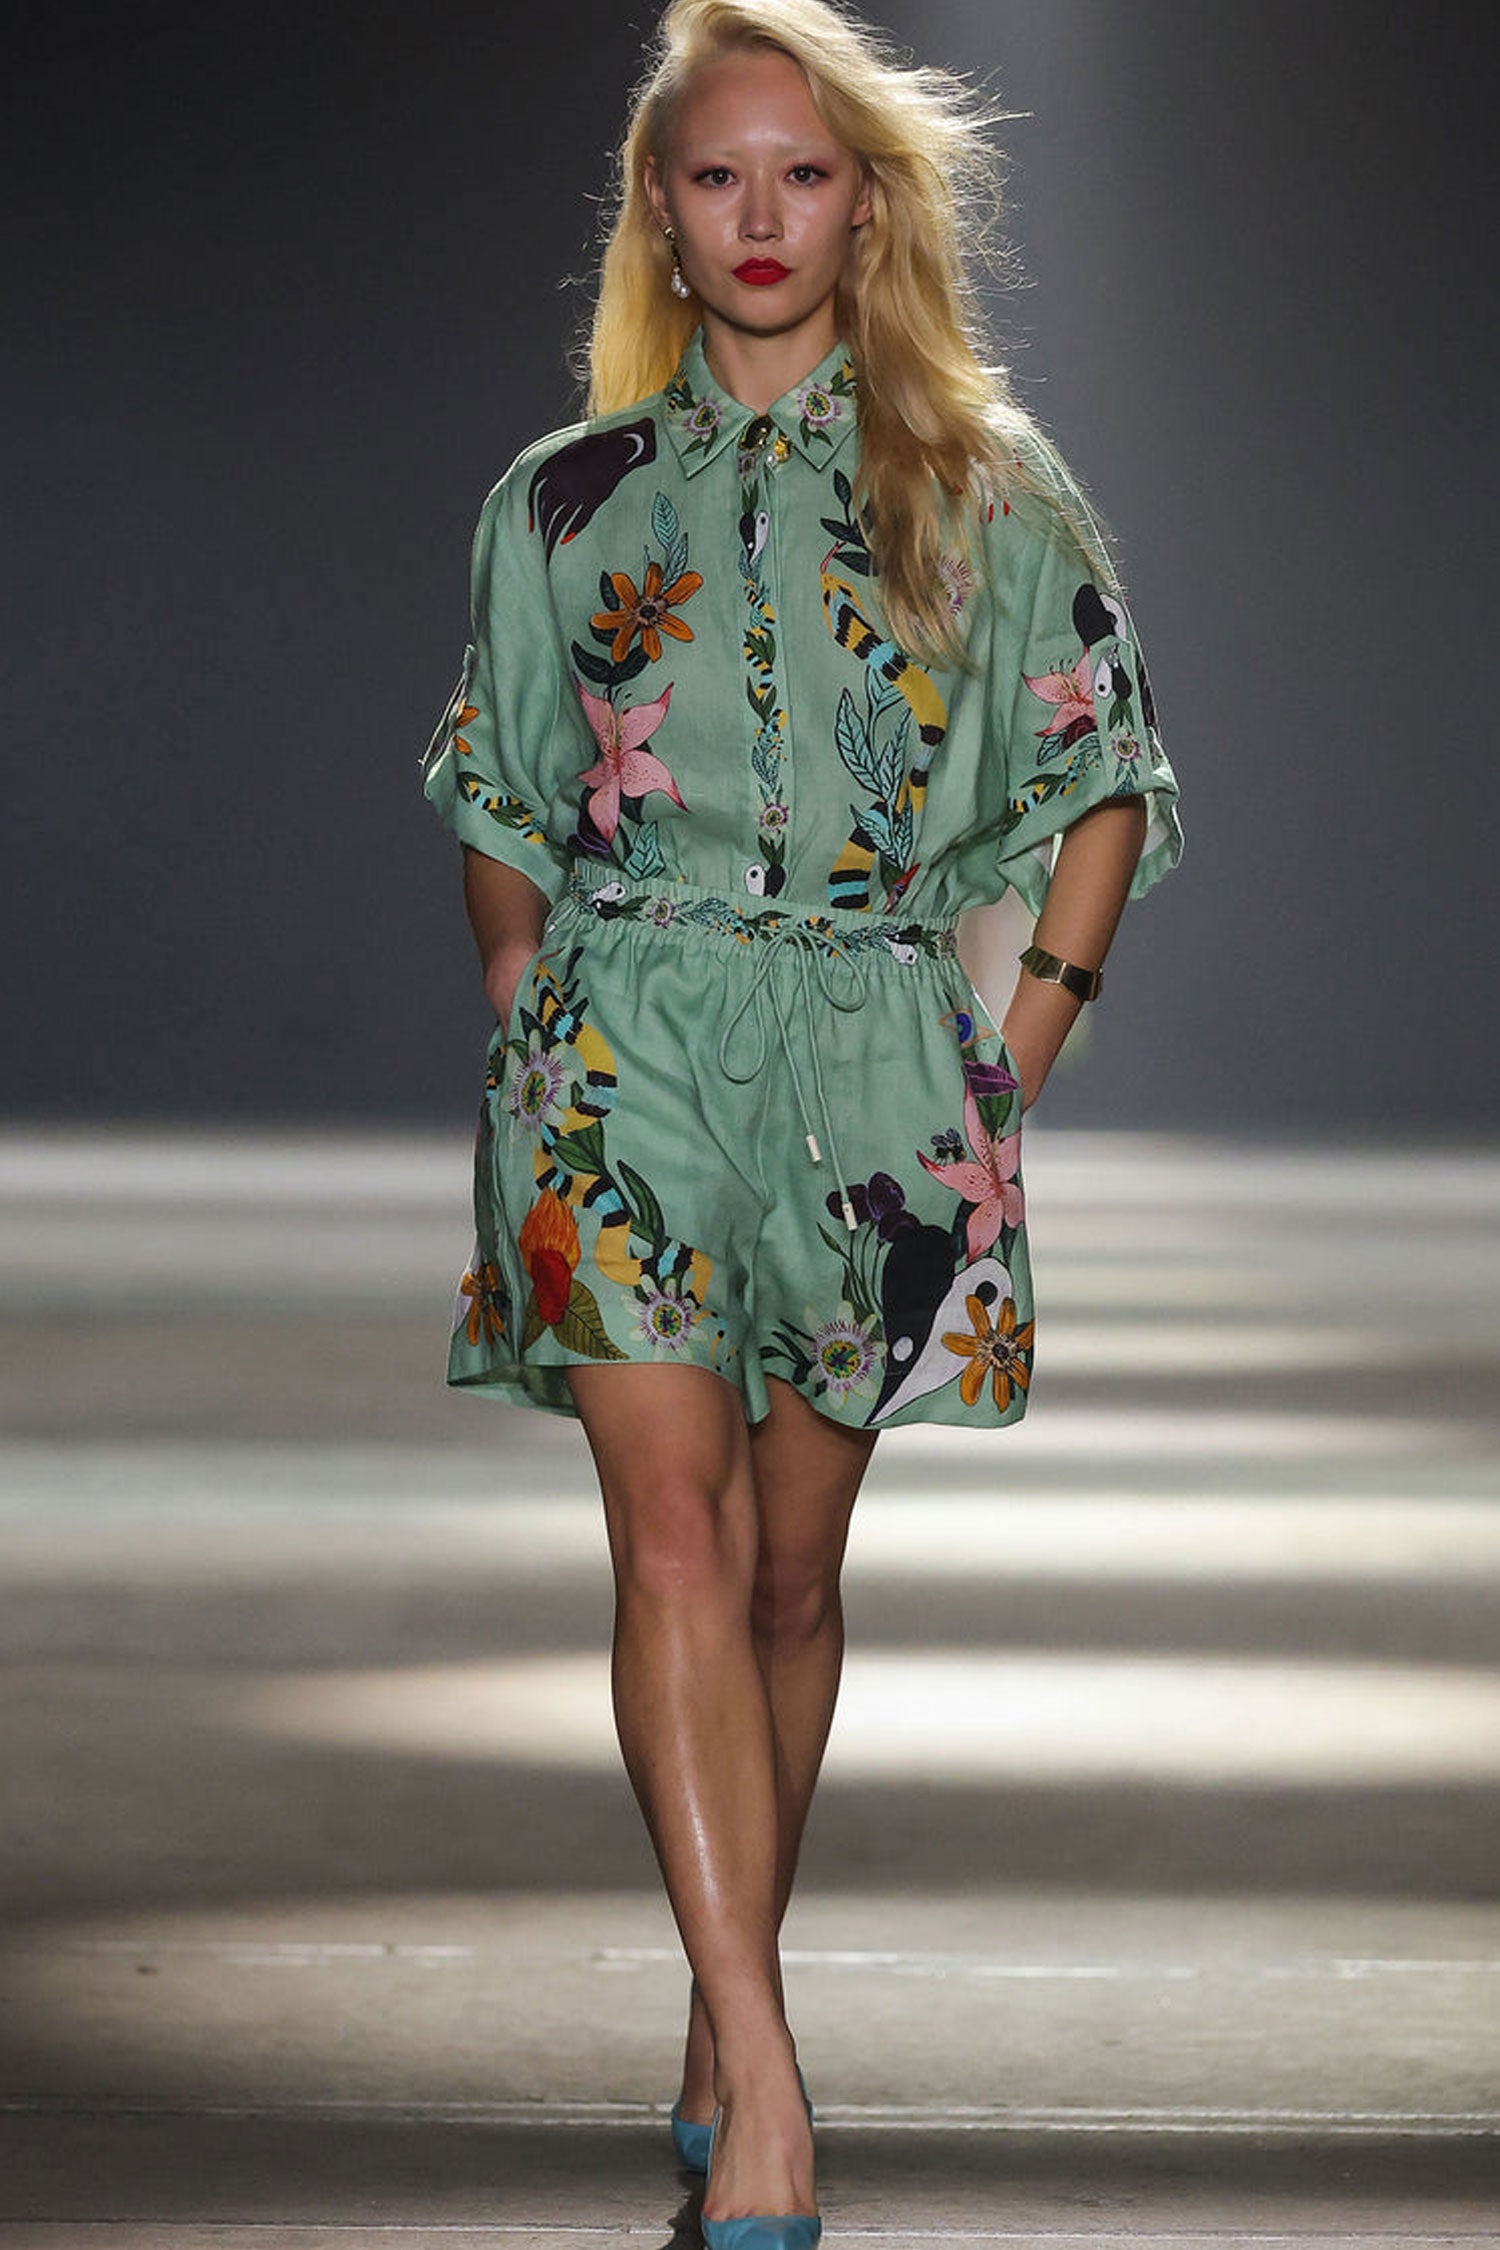 Summer Monochrome: Beige Smocked Top & Linen Shorts - Meagan's Moda